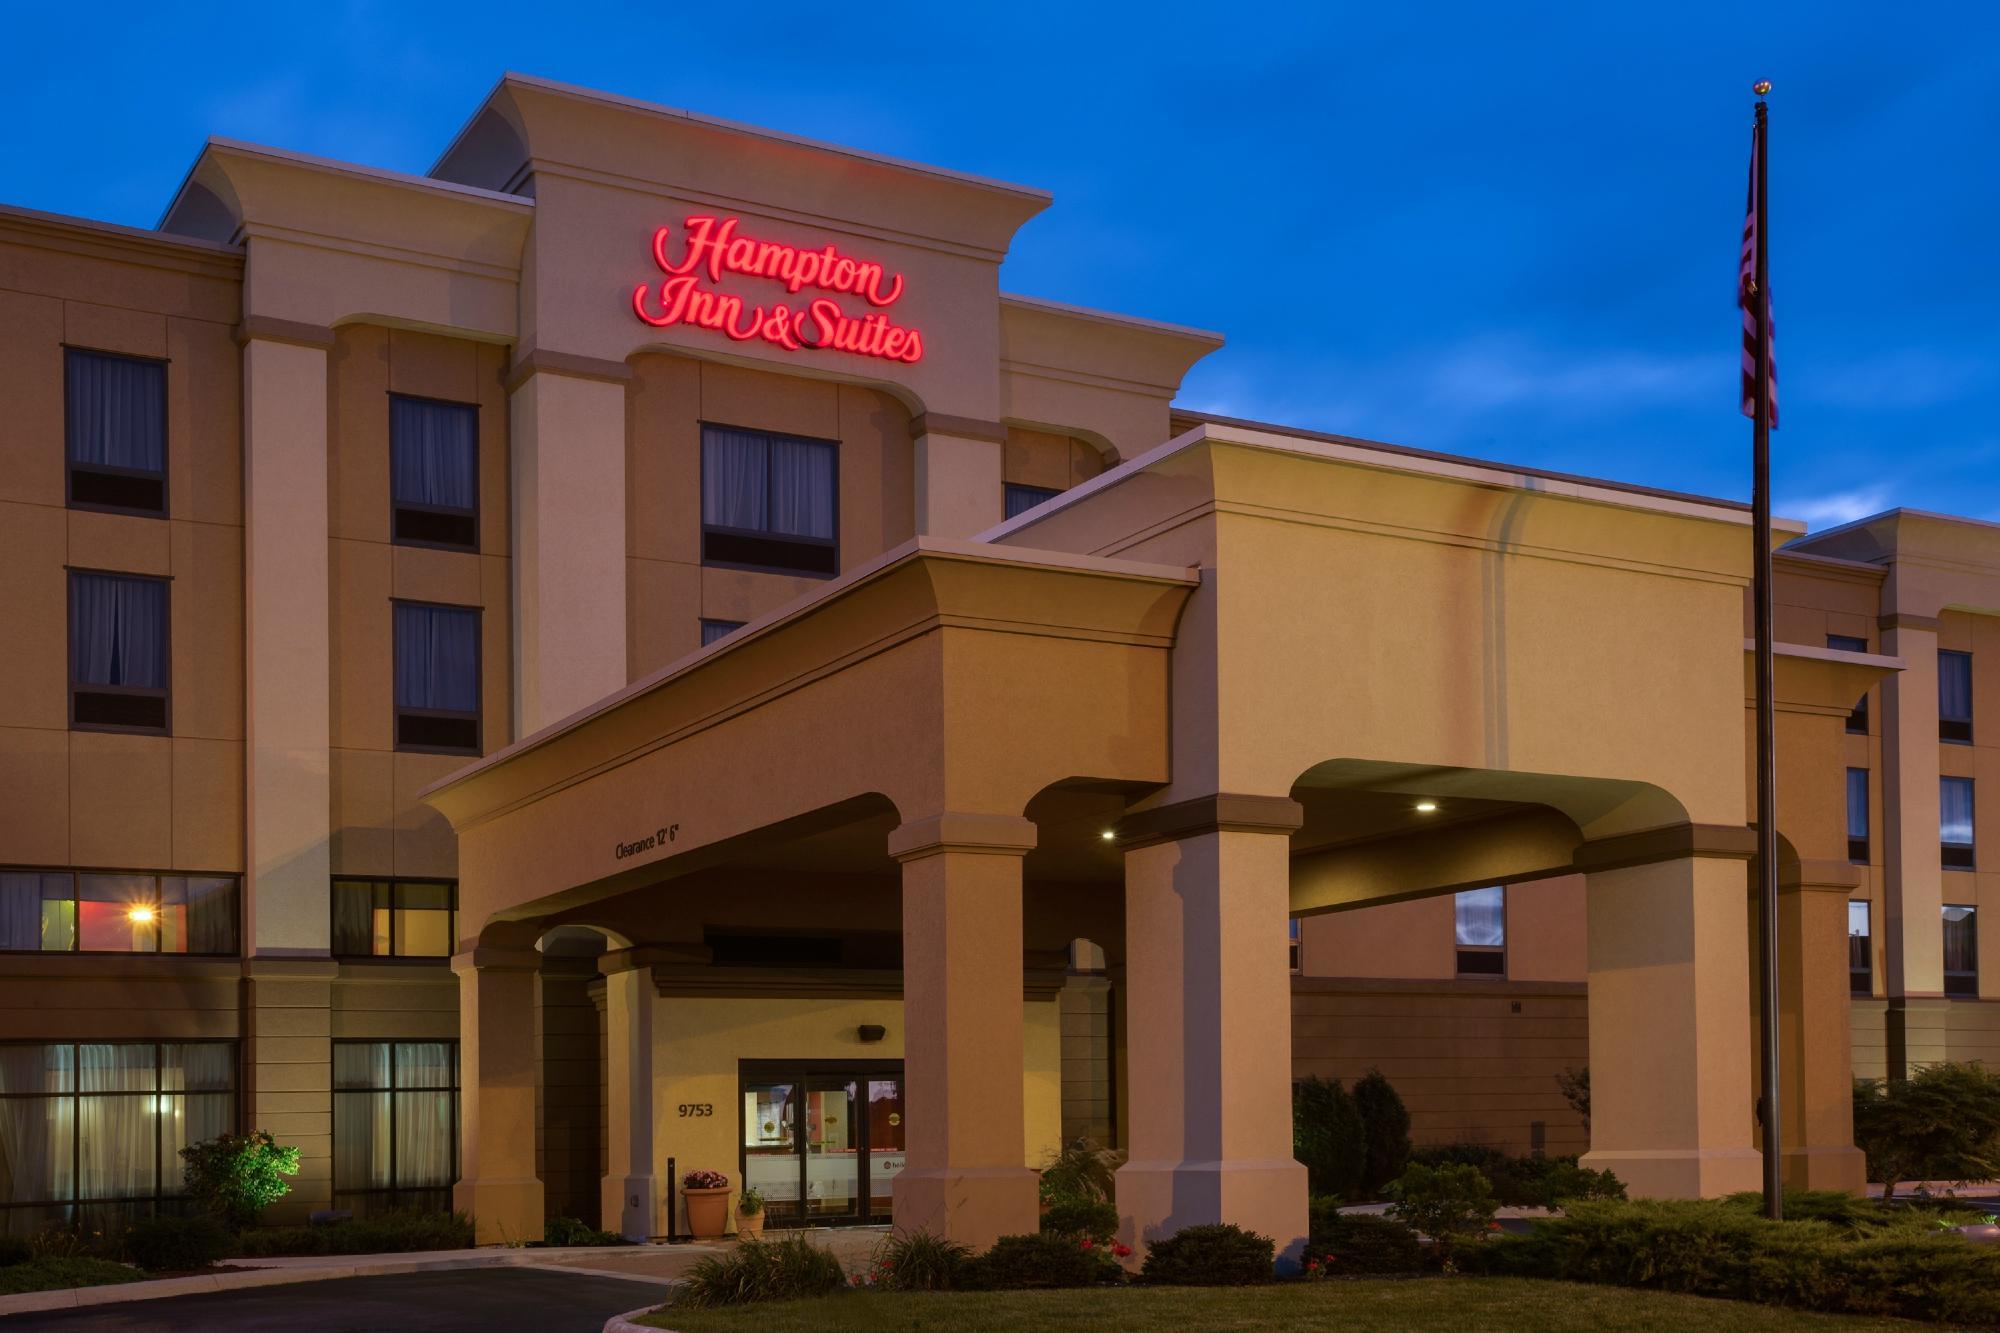 Photo of Hampton Inn & Suites Toledo-Perrysburg, Rossford, OH